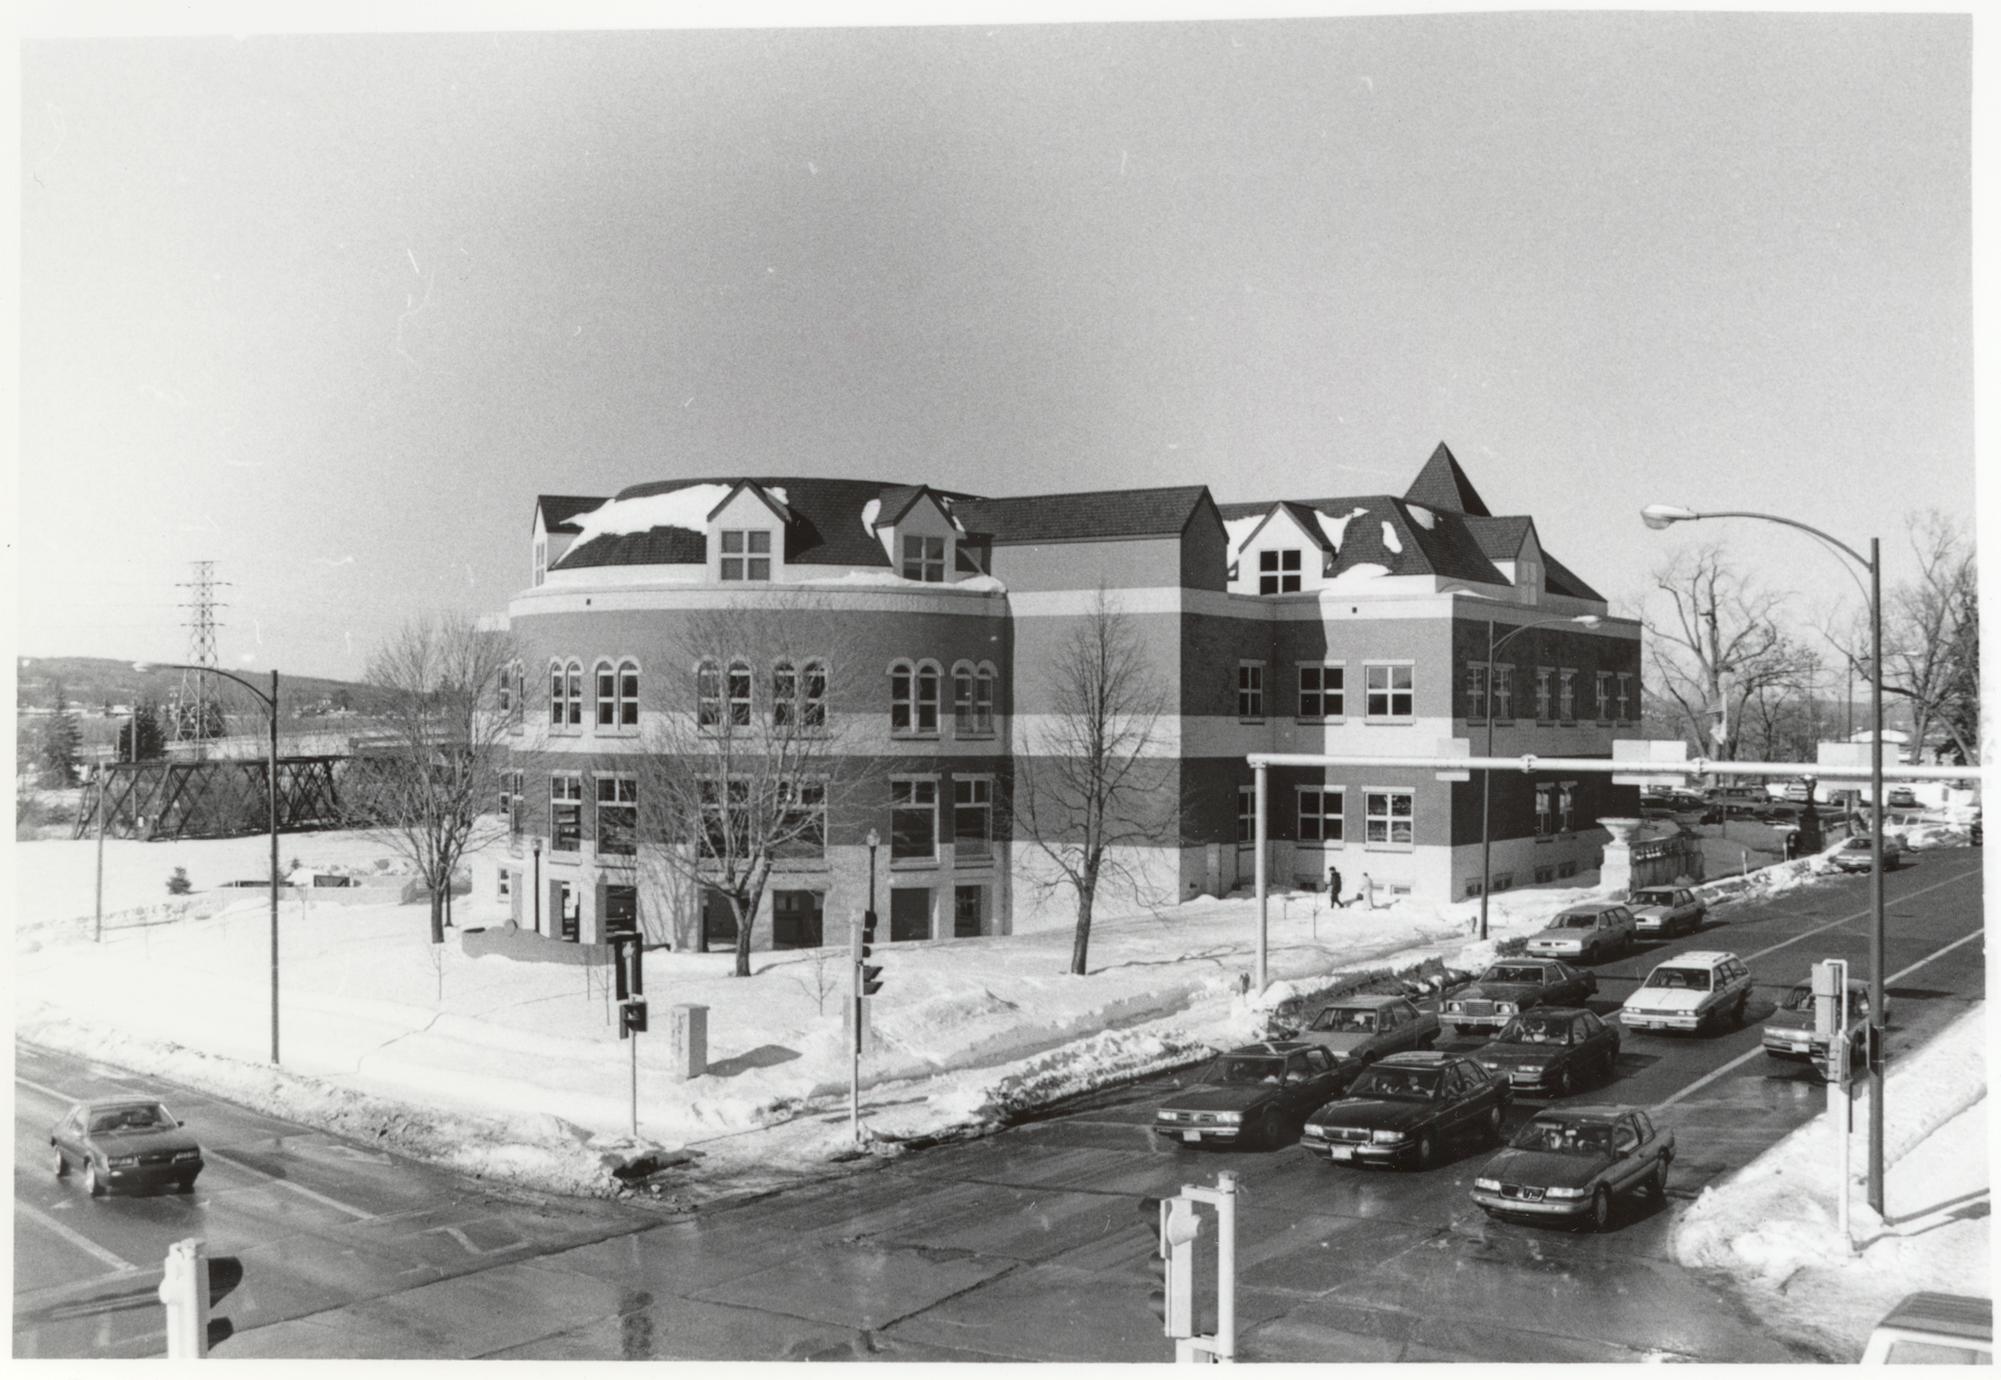  1995 Building Of The Marathon County Public Library UWDC UW 